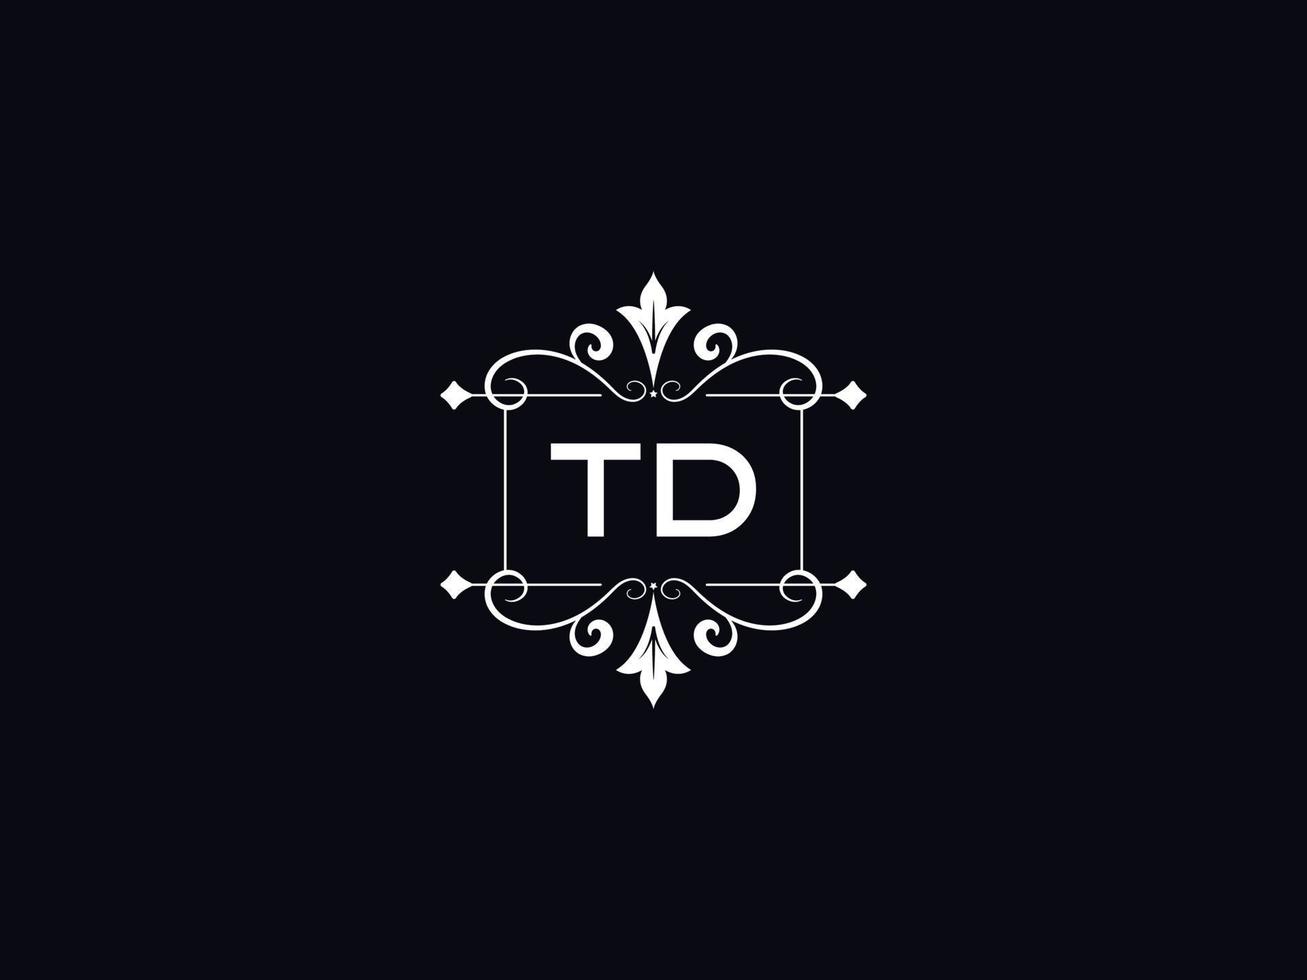 Professional Td Logo, Minimalist TD Luxury Logo Letter Design vector